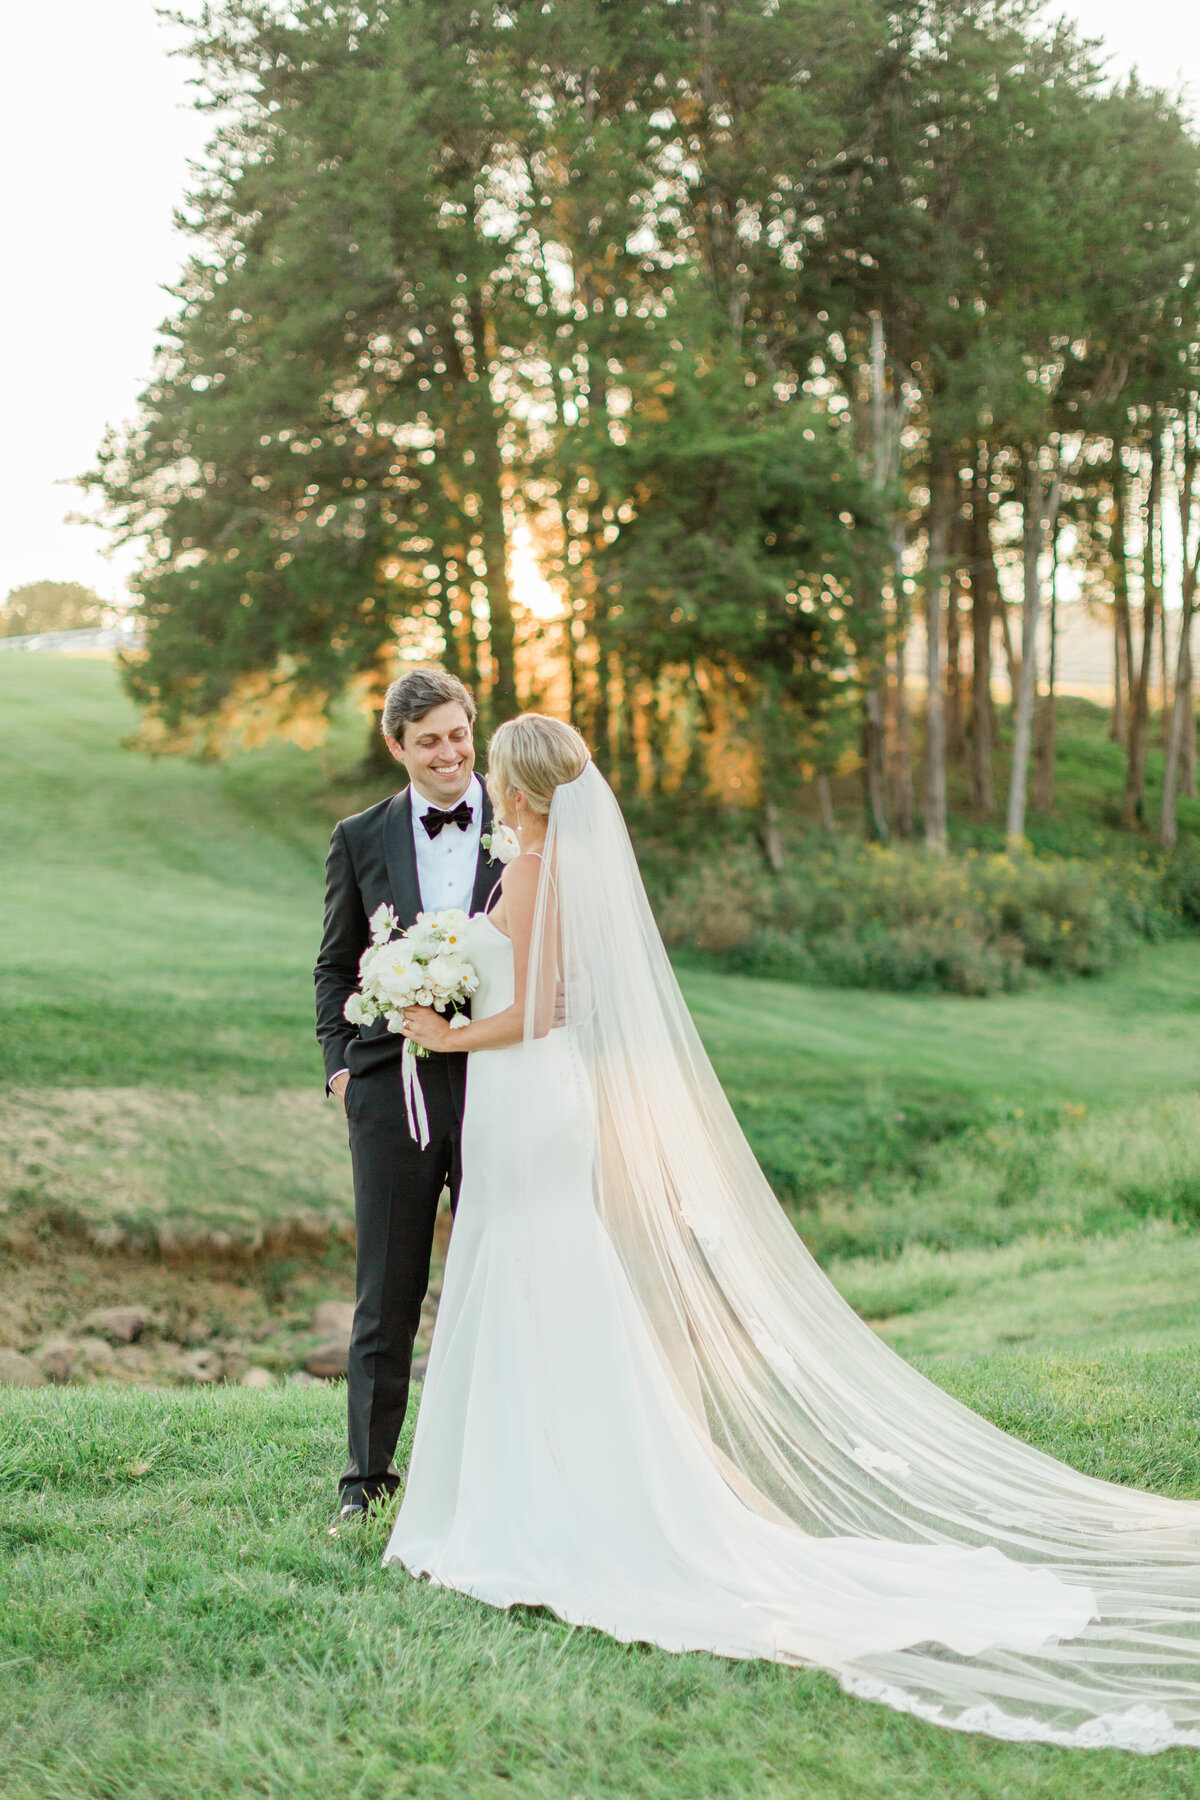 Matt&Carson-CastleHillCider-Charlottesville-Wedding-KelseyMariePhotography-September2021-4180